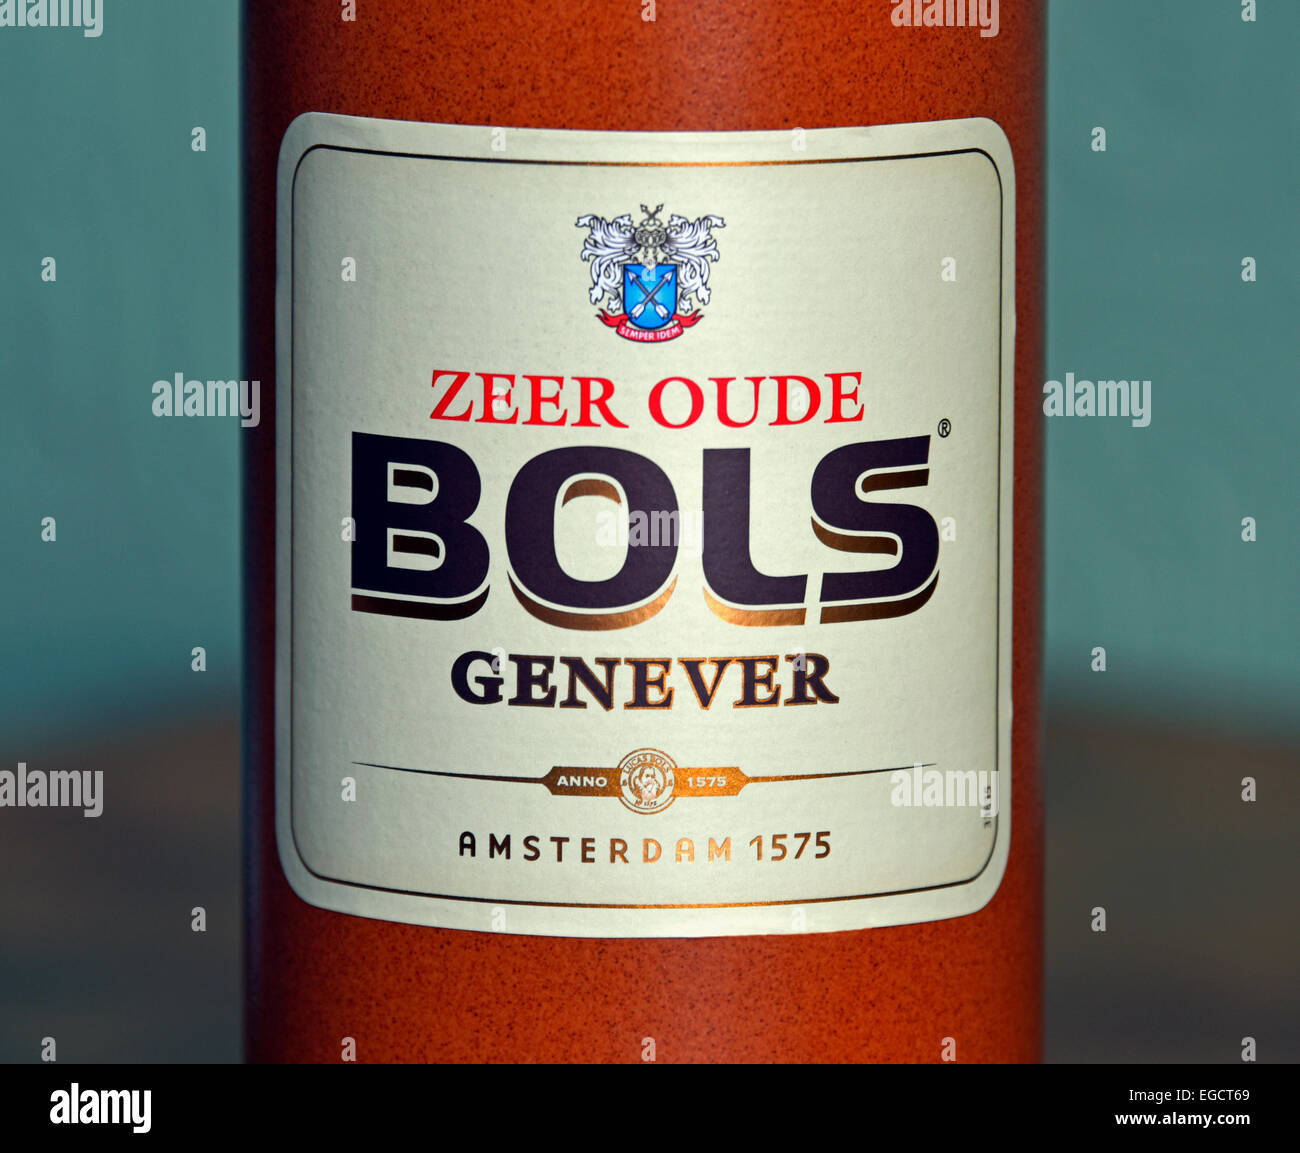 Bols Zeer Oude Genever label on clay bottle Stock Photo - Alamy